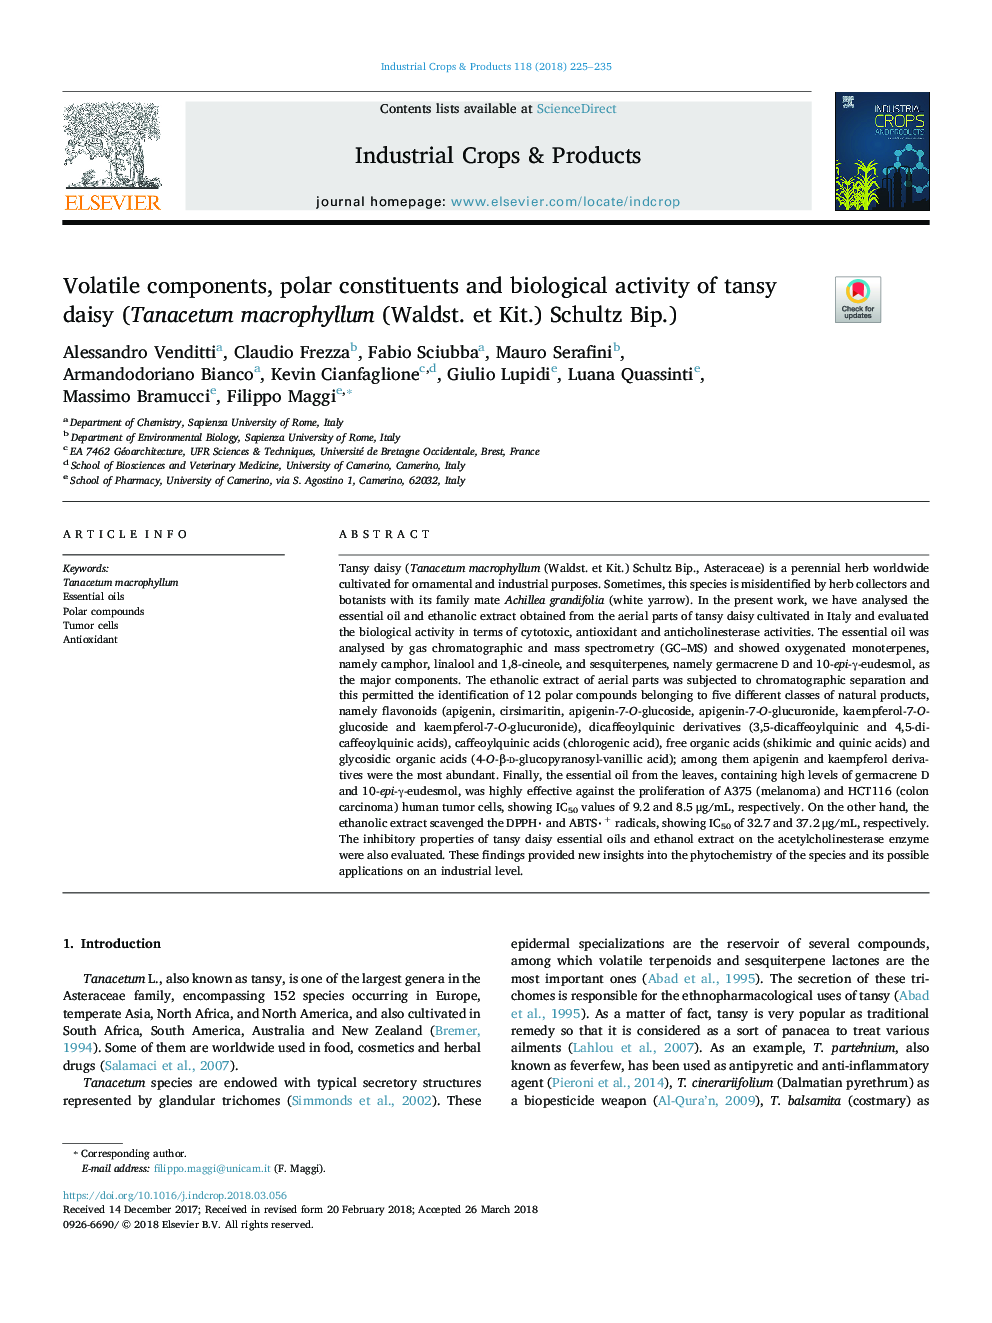 Volatile components, polar constituents and biological activity of tansy daisy (Tanacetum macrophyllum (Waldst. et Kit.) Schultz Bip.)